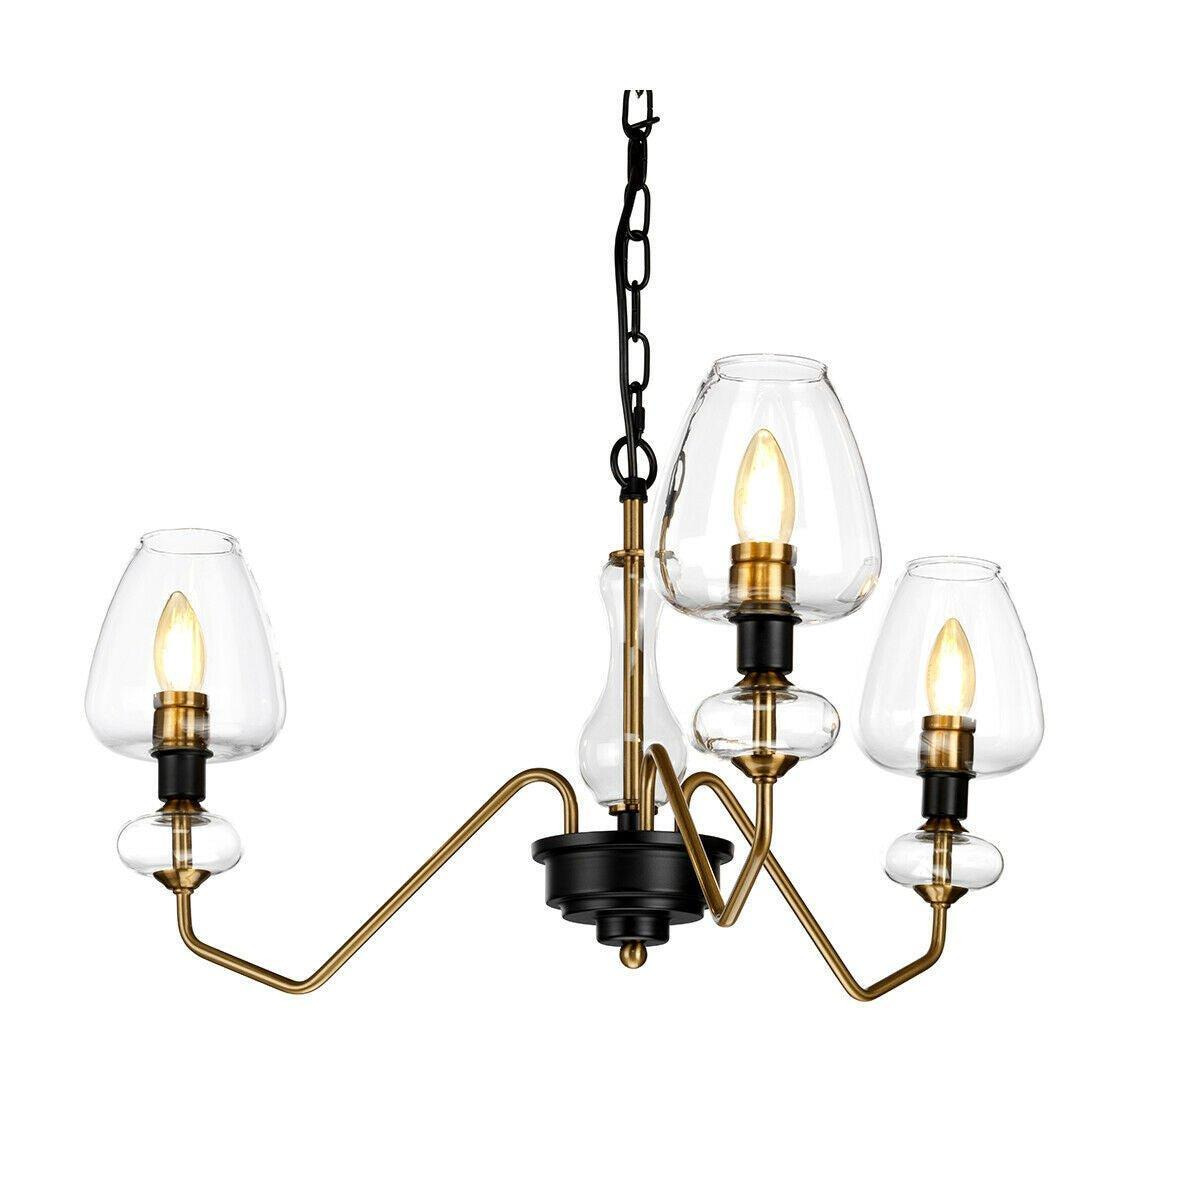 3 Bulb Pendant Light Fitting Aged Brass Finish Charcoal Black Paint LED E14 40W - image 1